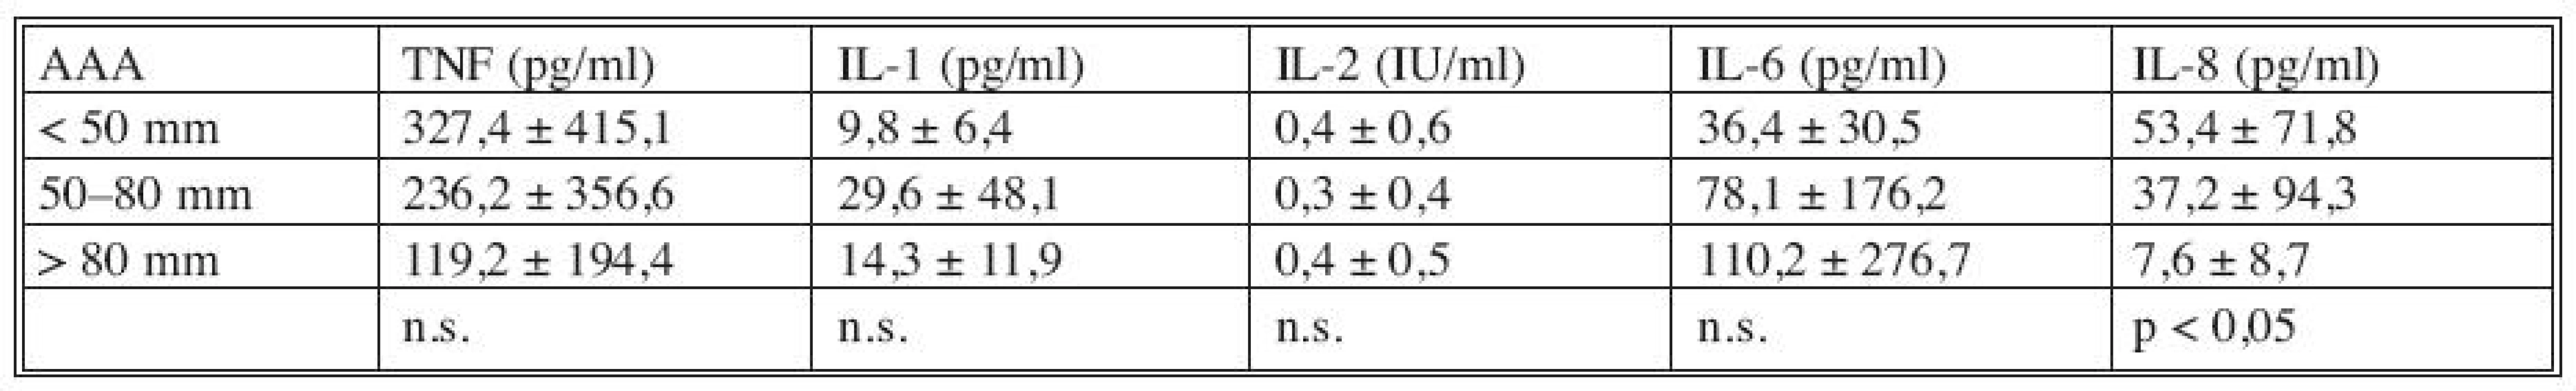 Korelace plazmatických hladin cytokinů s průměrem AAA
Tab. 2. Correlation between the cytokines plasmatic levels and the AAA diametres